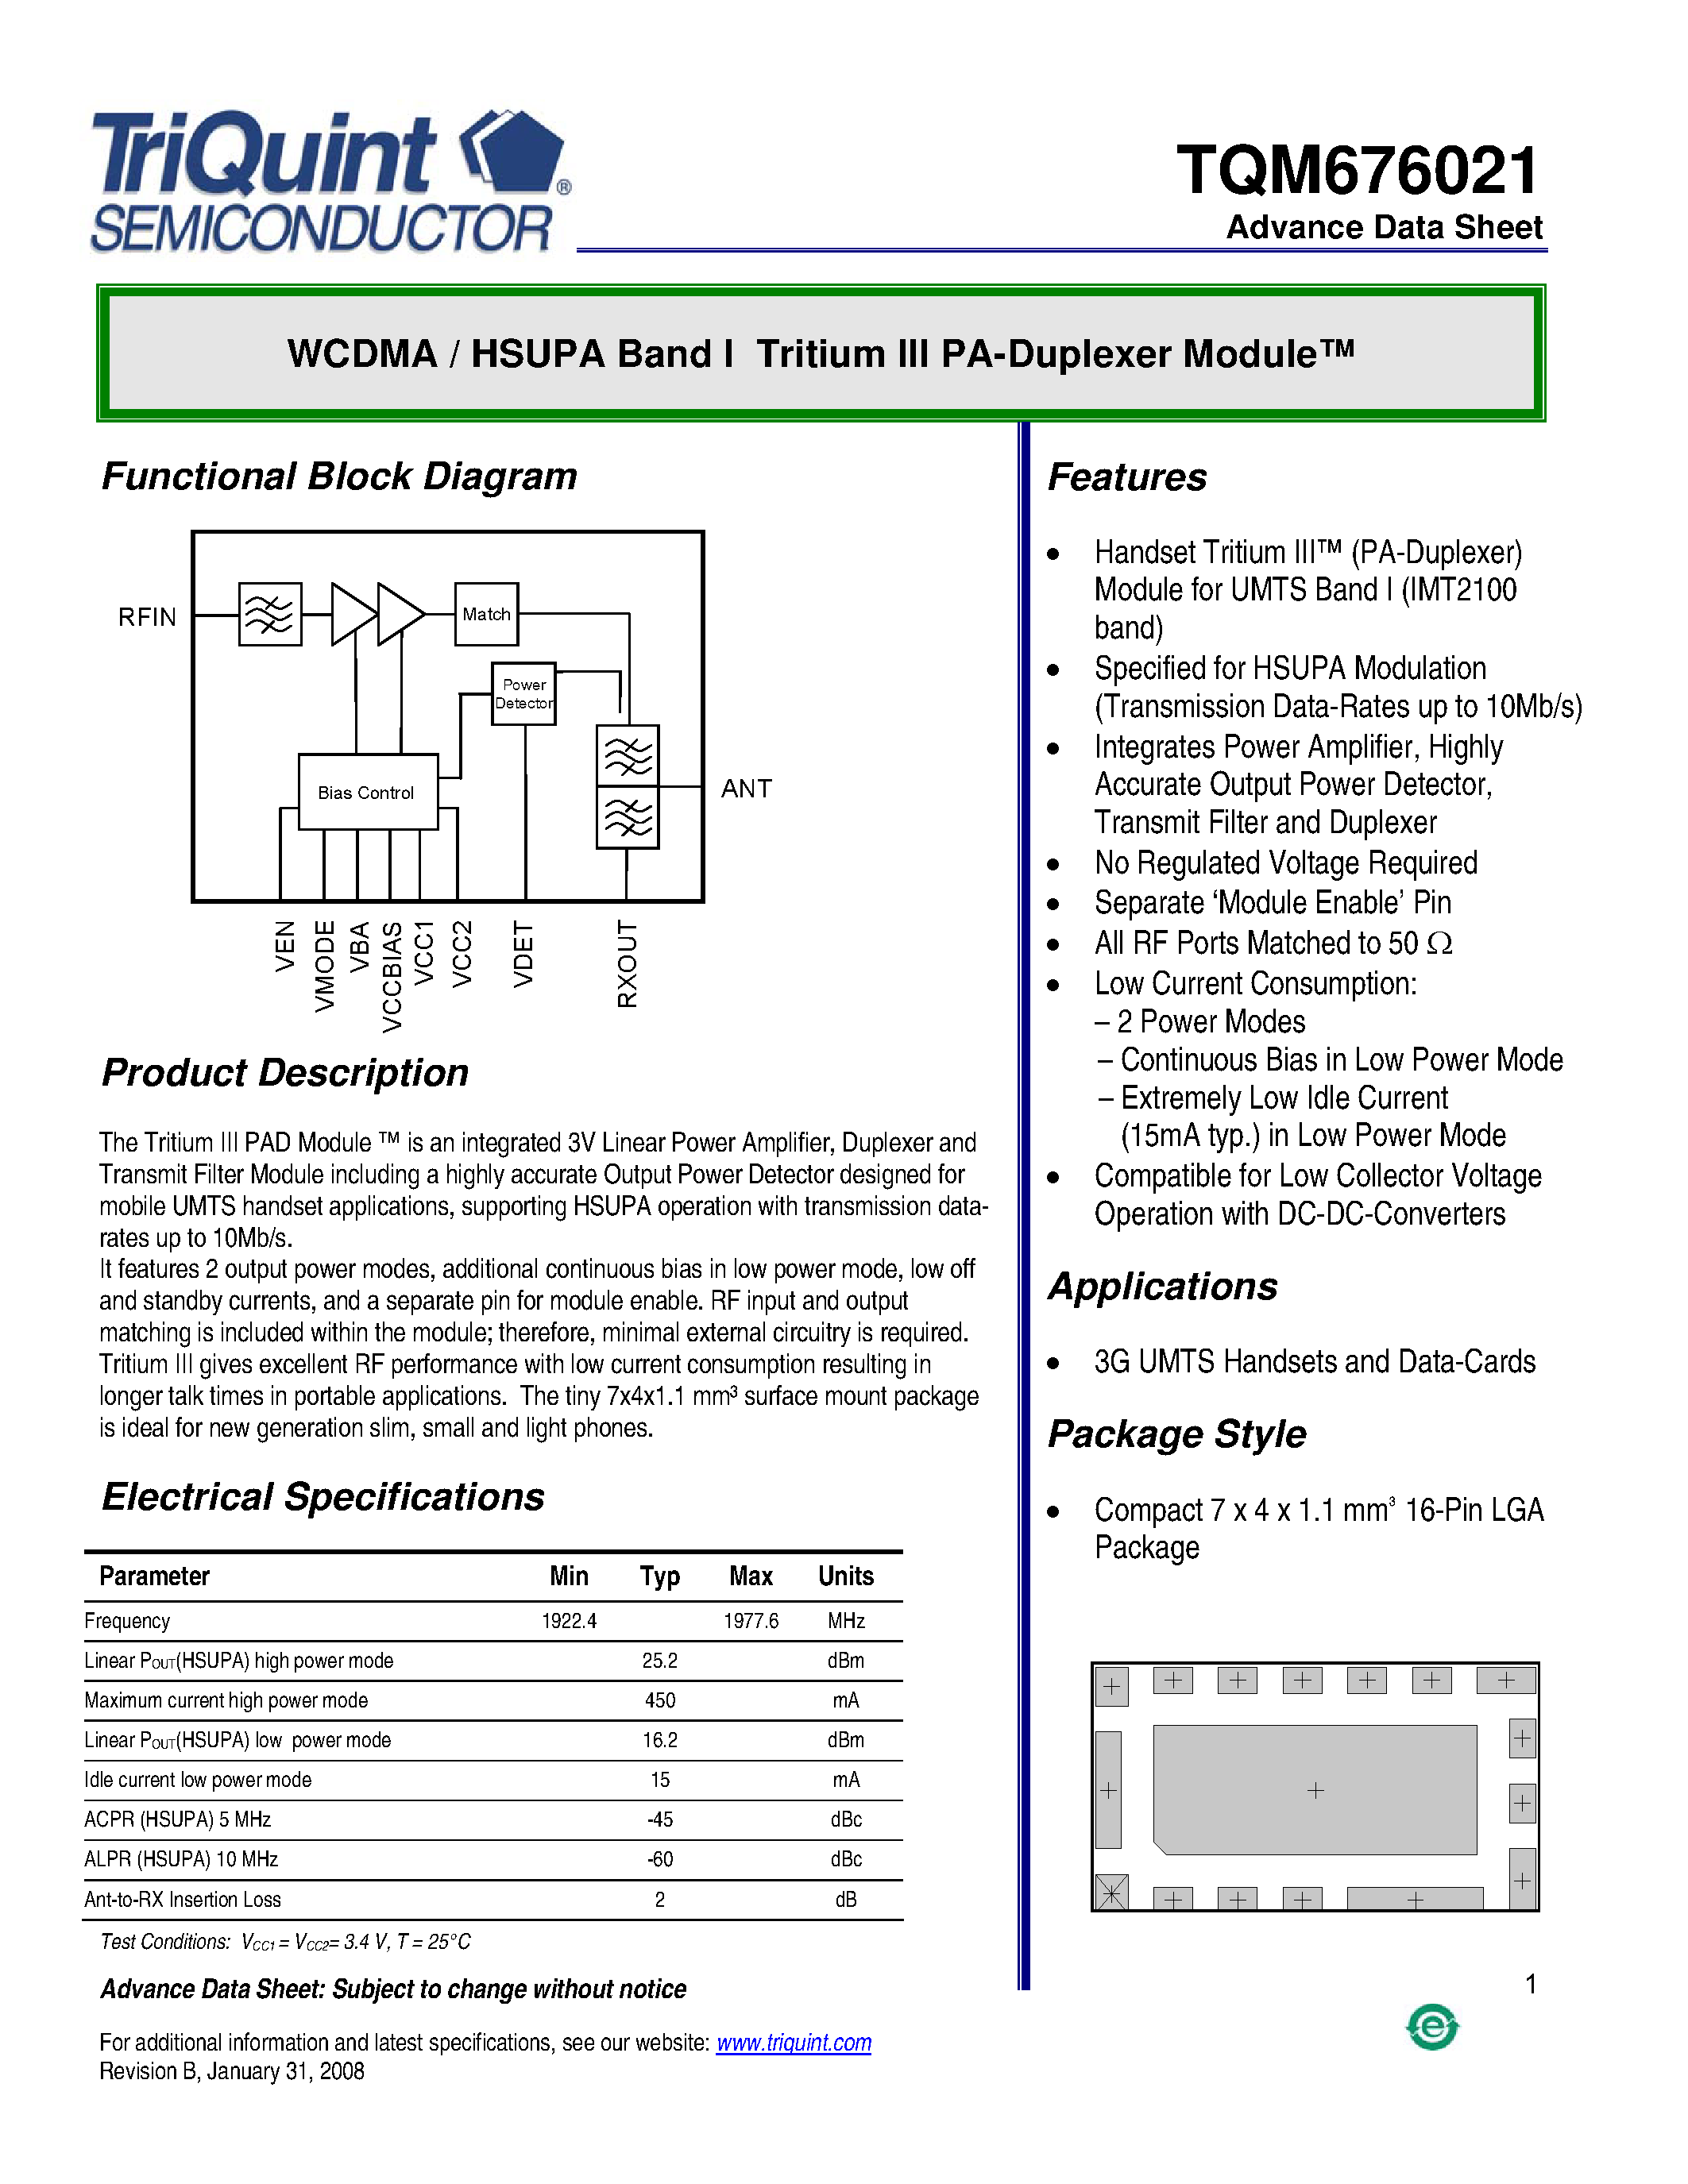 Datasheet TQM676021 - WCDMA/HSUPA Band I Tritium III PA-Duplexer Module page 1